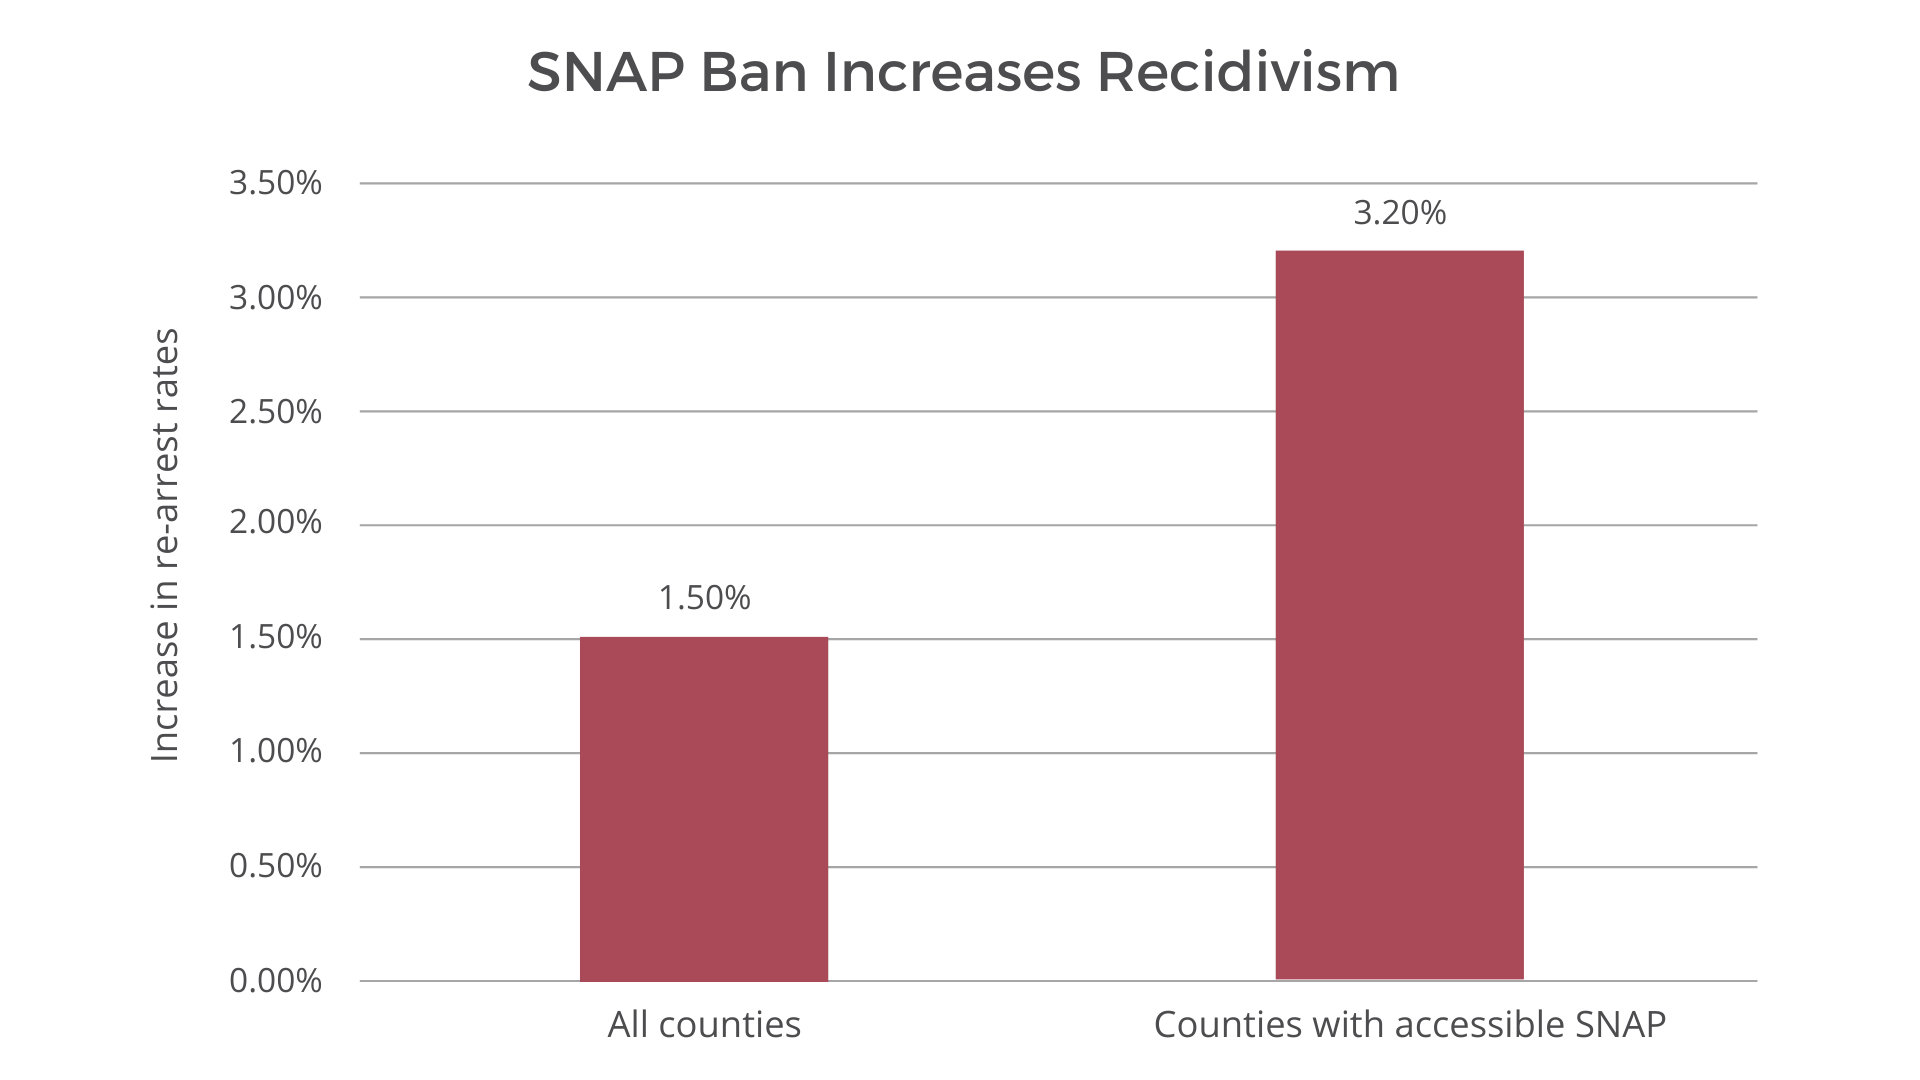 SNAP Bans Increase Recidivism